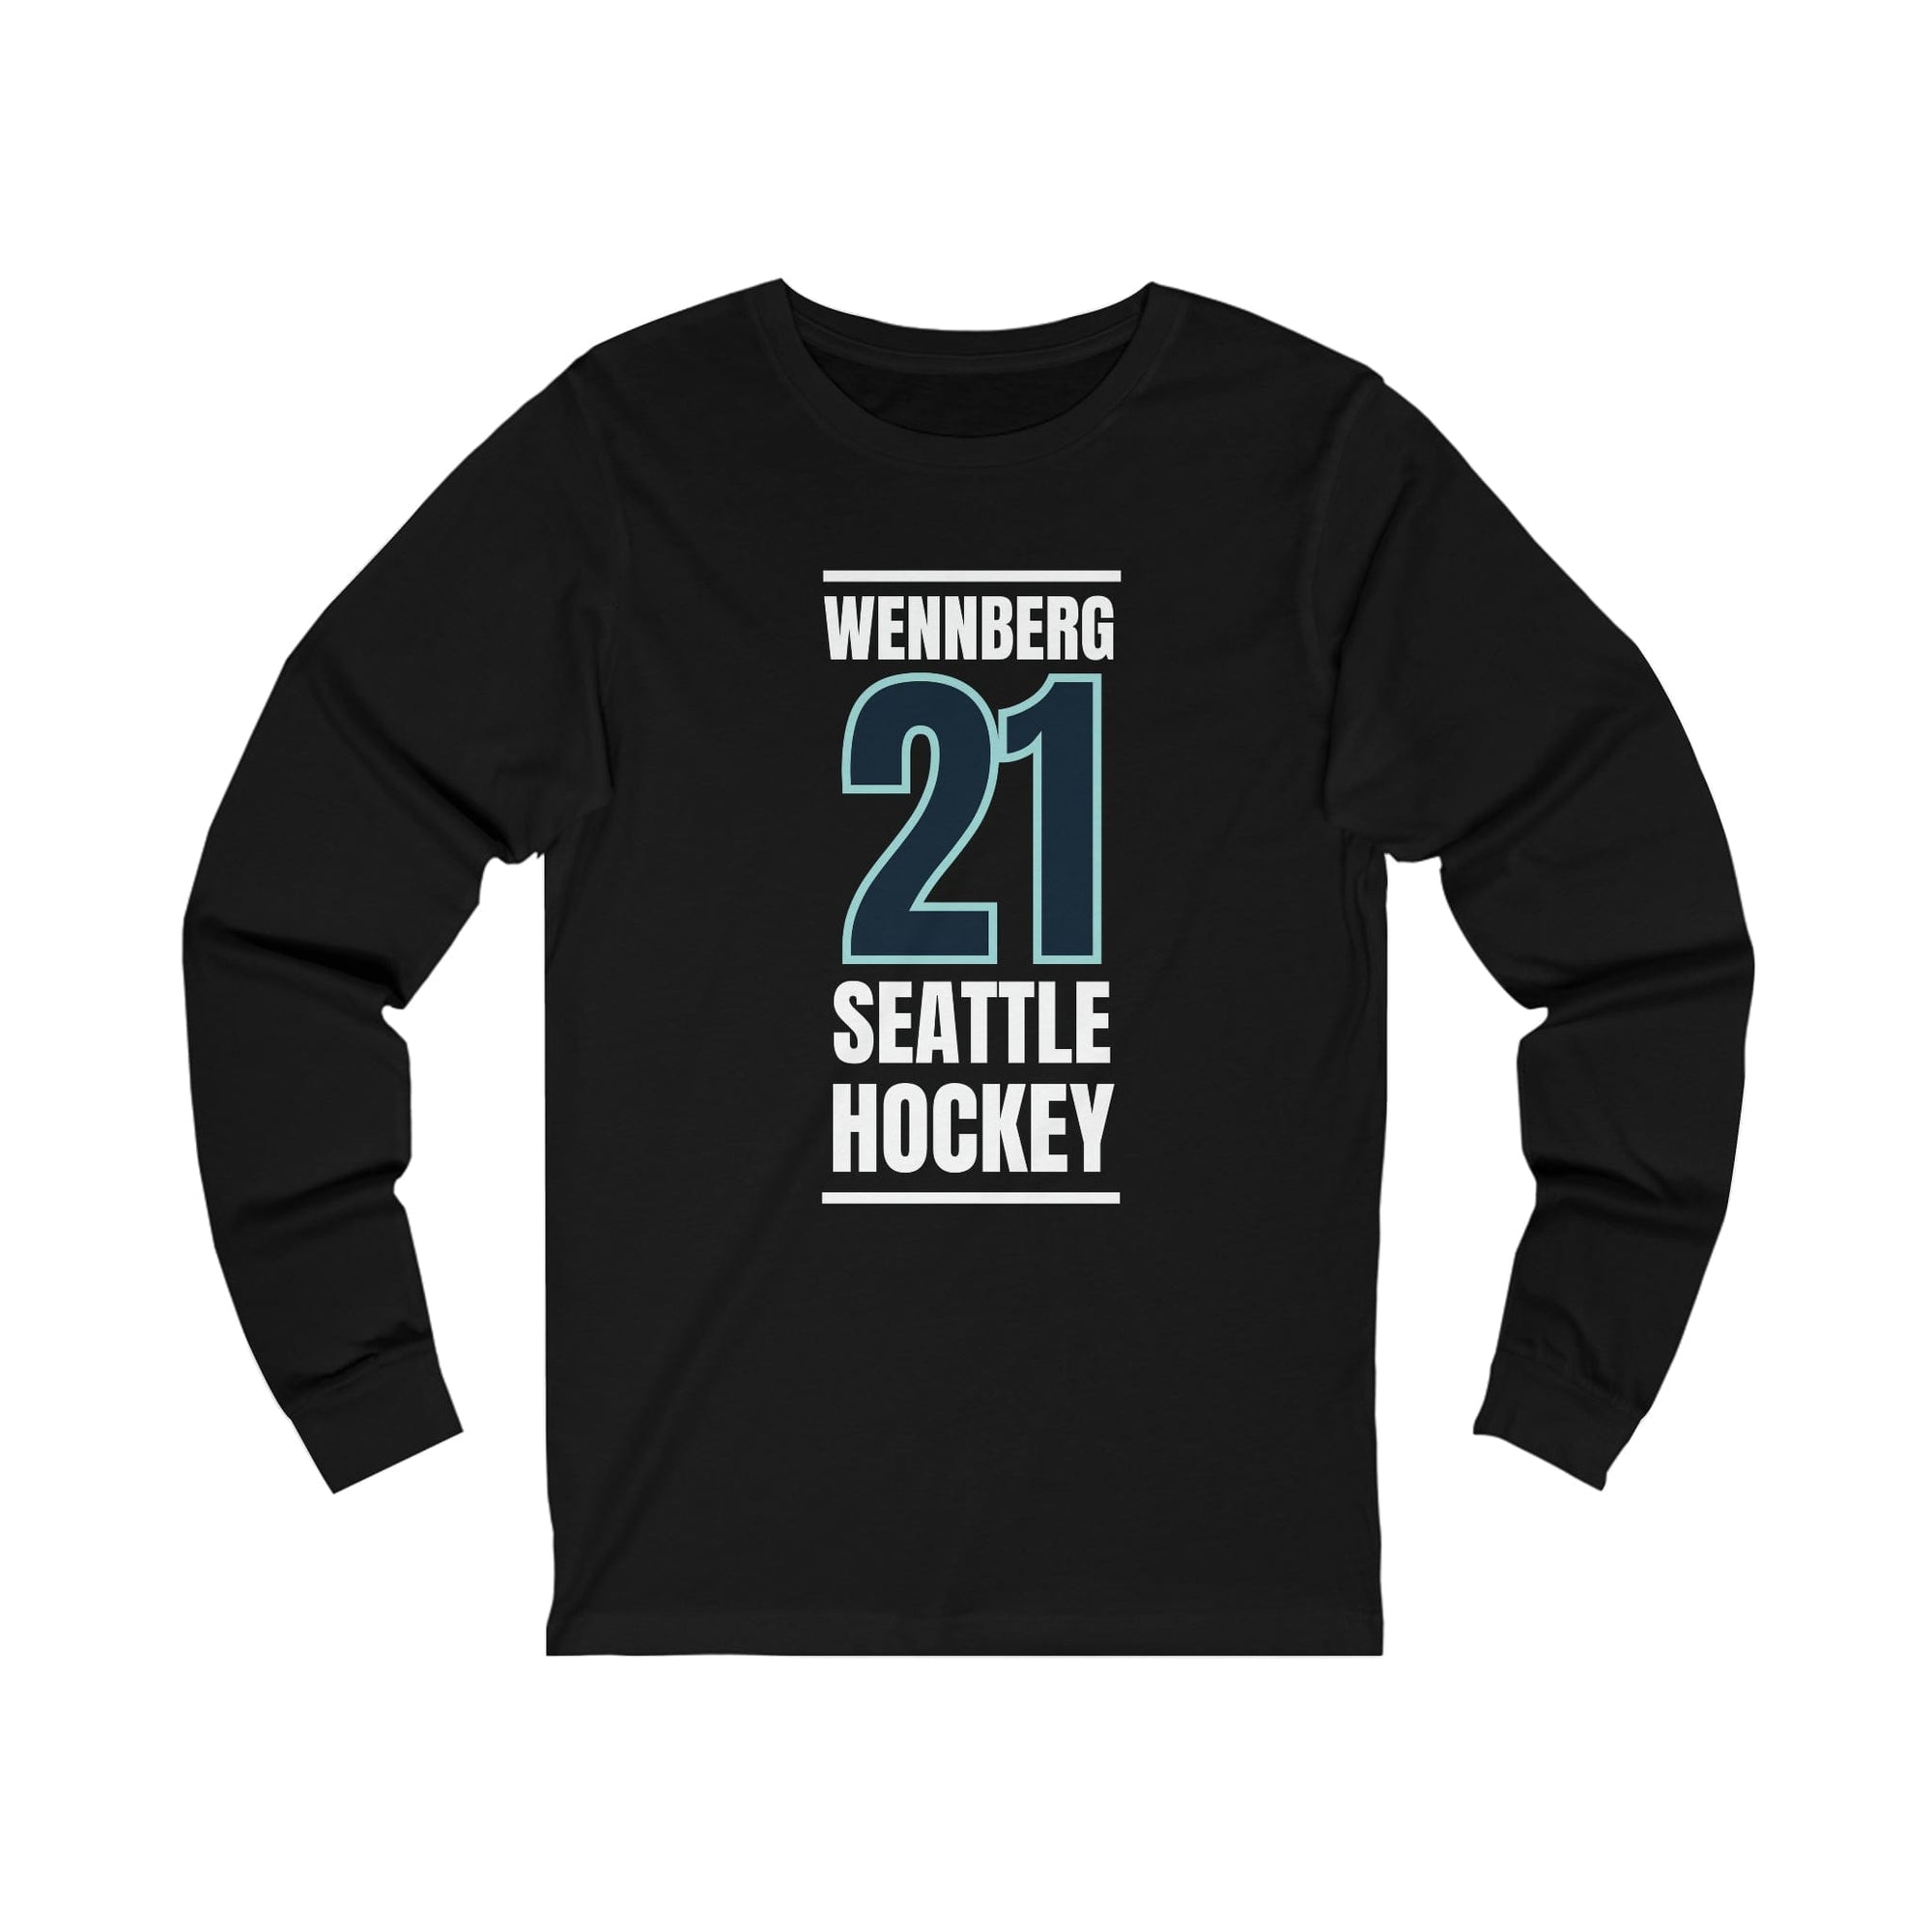 Long-sleeve Wennberg 21 Seattle Hockey Black Vertical Design Unisex Jersey Long Sleeve Shirt